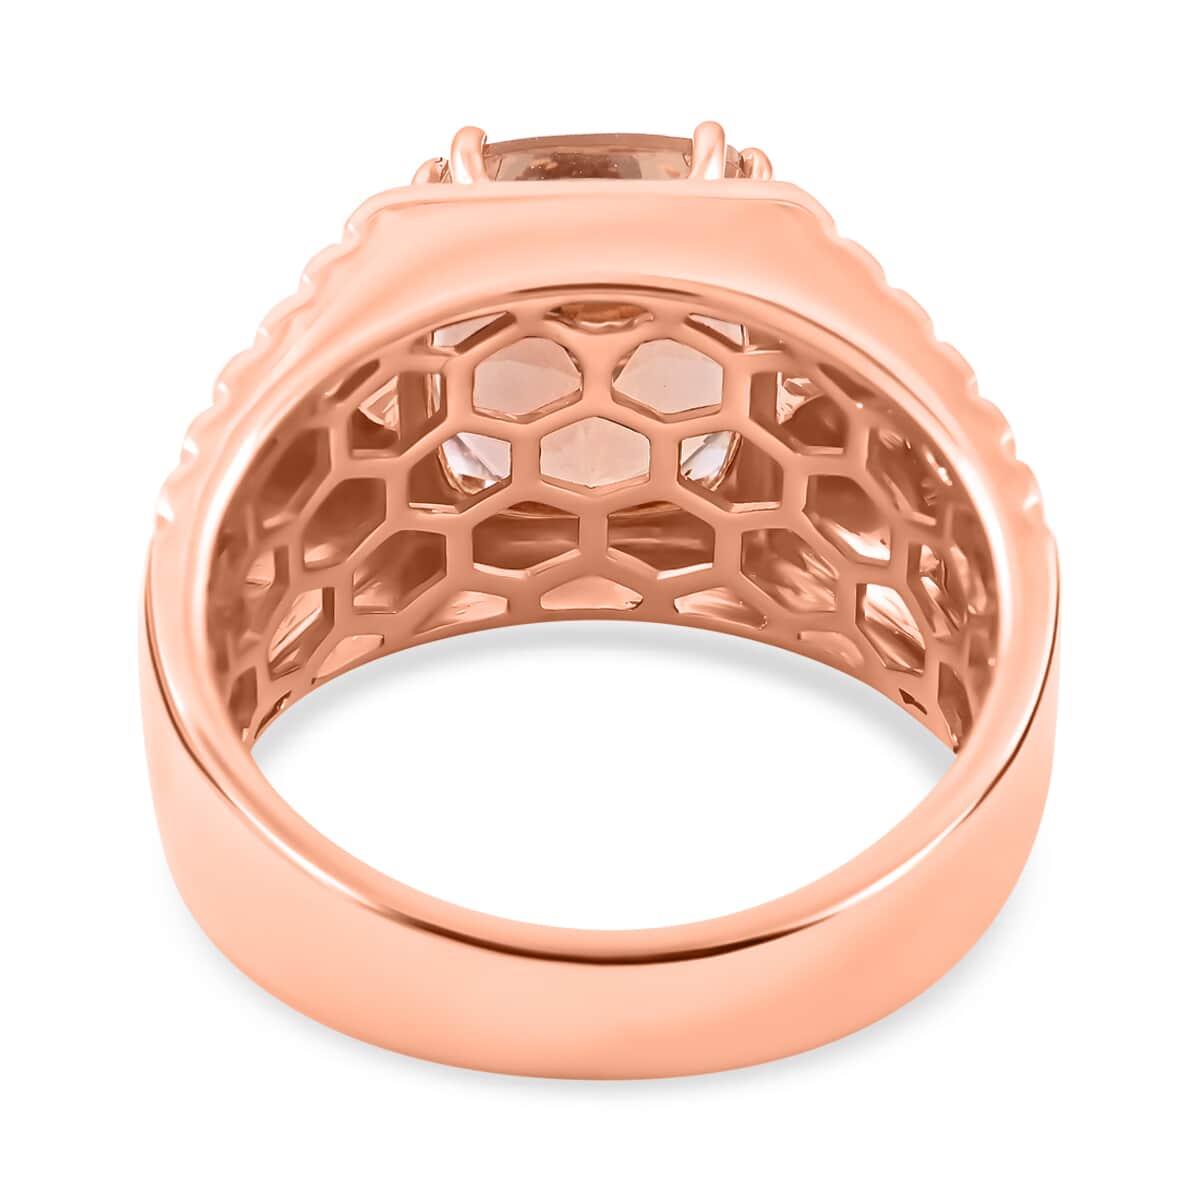 Luxoro 10K Rose Gold AAA Marropino Morganite and G-H I2 Diamond Men's Ring (Size 10.0) 8.15 Grams 4.65 ctw image number 4